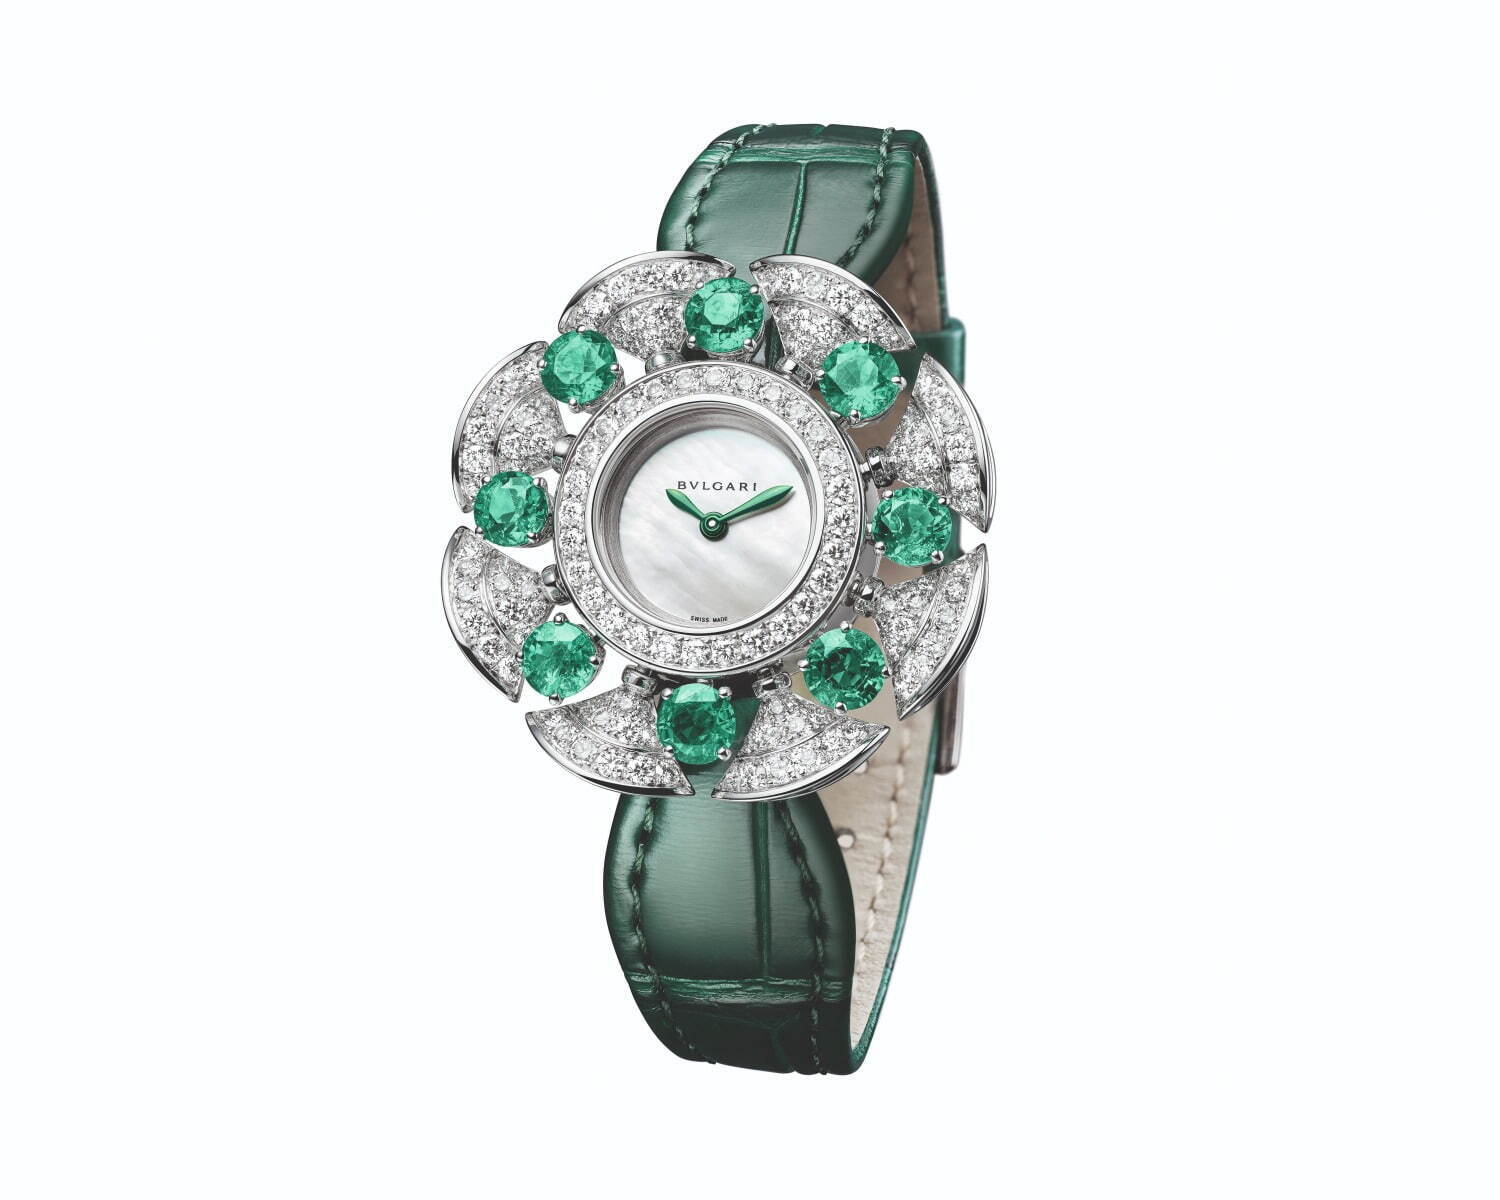 Bvlgari Divissima Cocktail Watch in Emerald and Green alligator strap